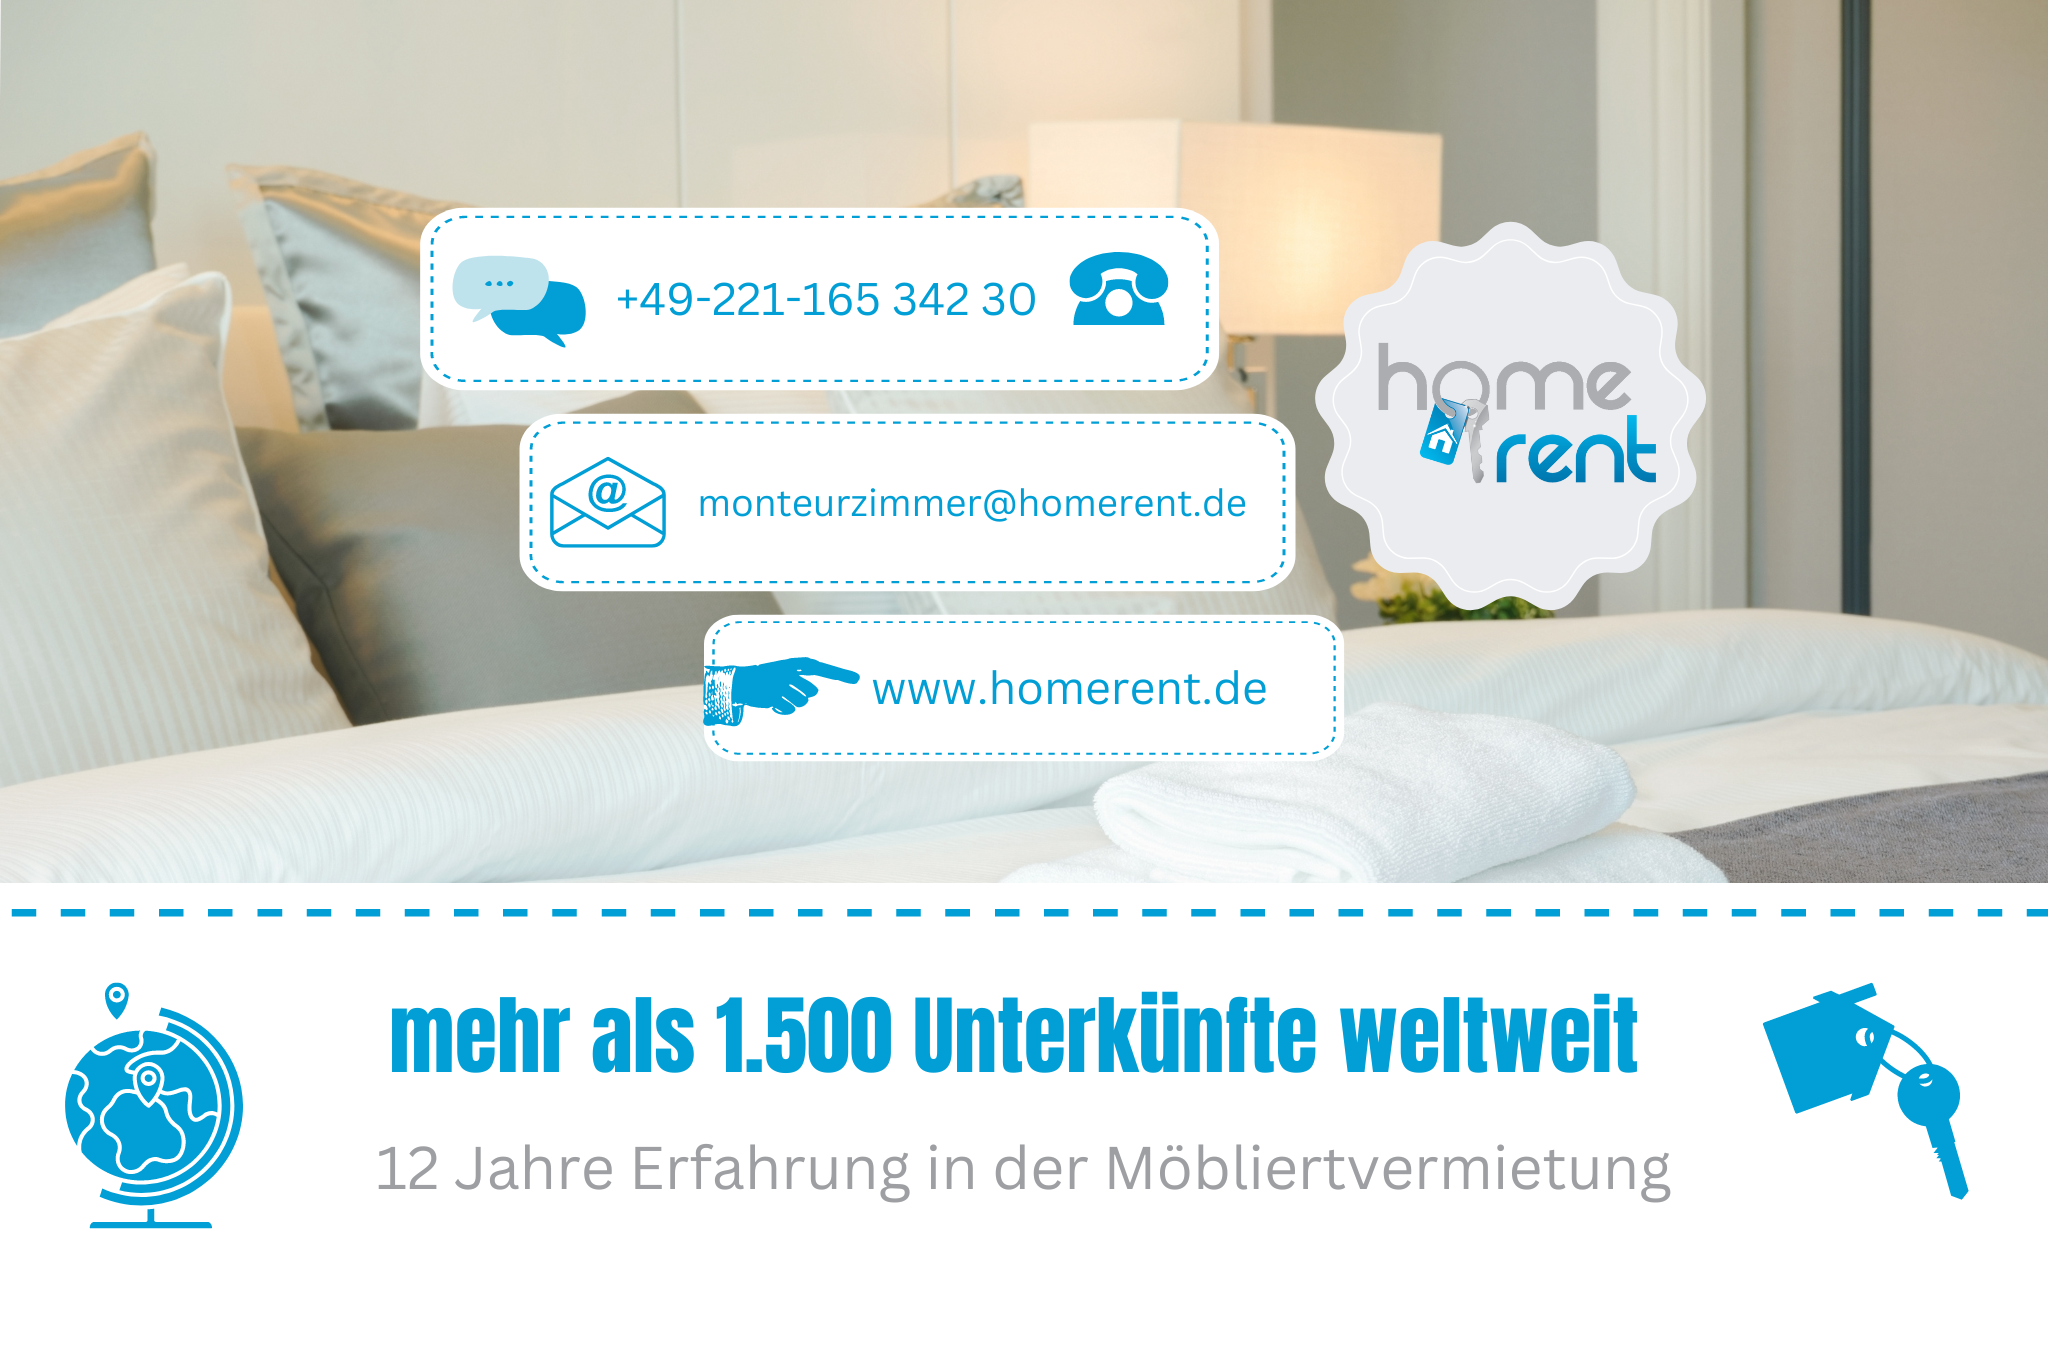  HomeRent in Krefeld, Mönchengladbach, Meerbusch, Neuss und Umgebung, Monteurunterkunft in Krefeld